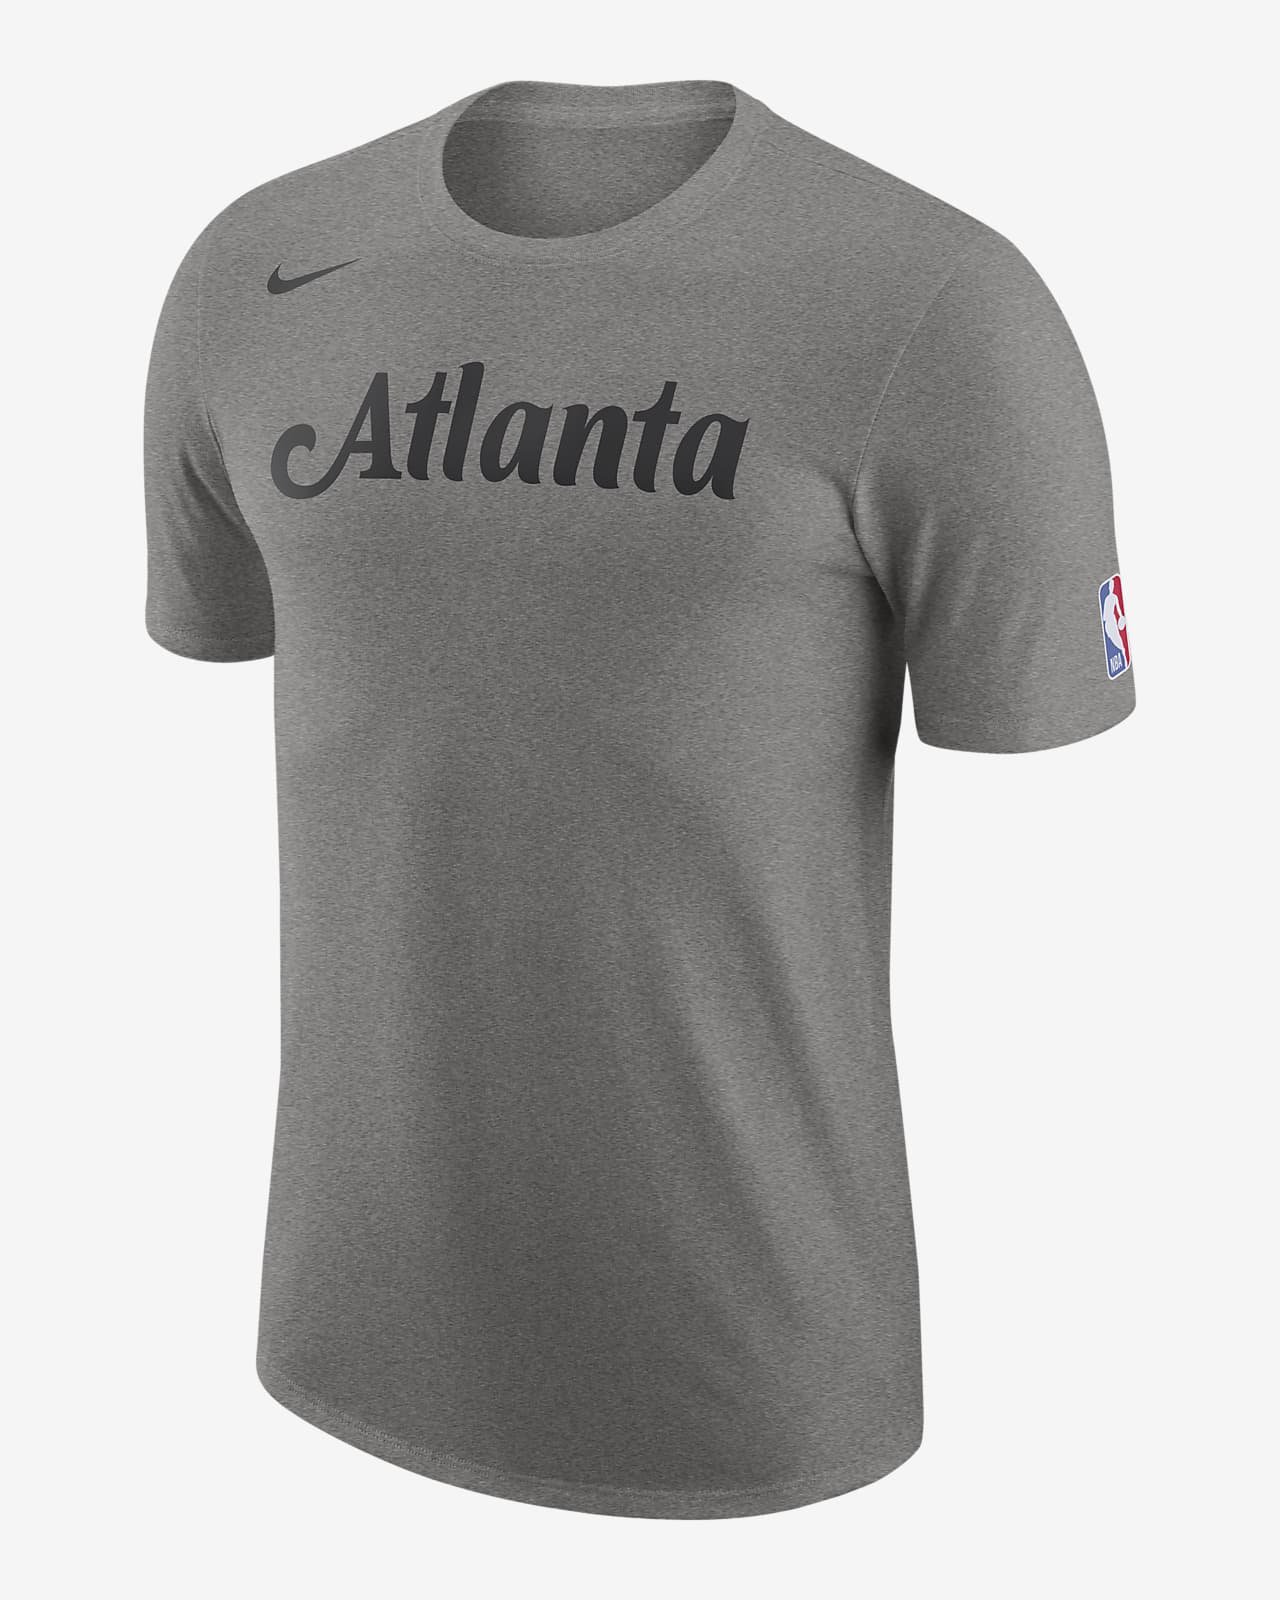 $60 NEW Nike ATLANTA HAWKS MEN'S NBA POLO Shirt Team Issued RETRO LOGO S M